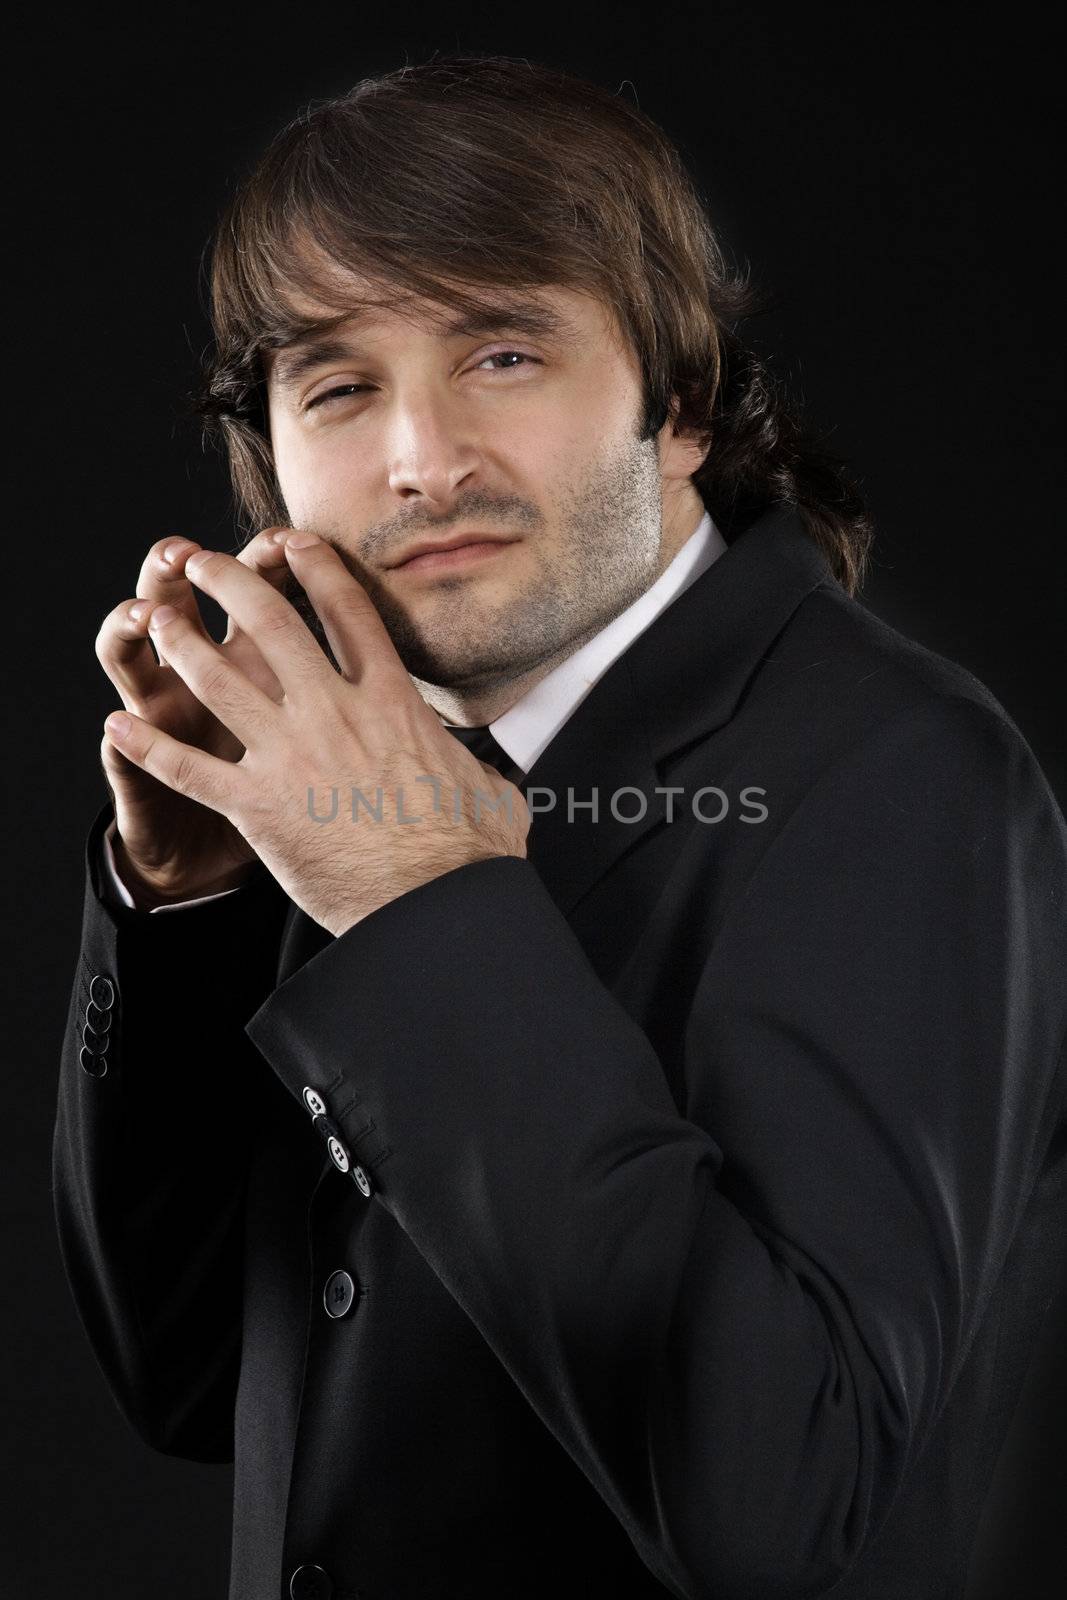 Sly man in elegant suit against black background